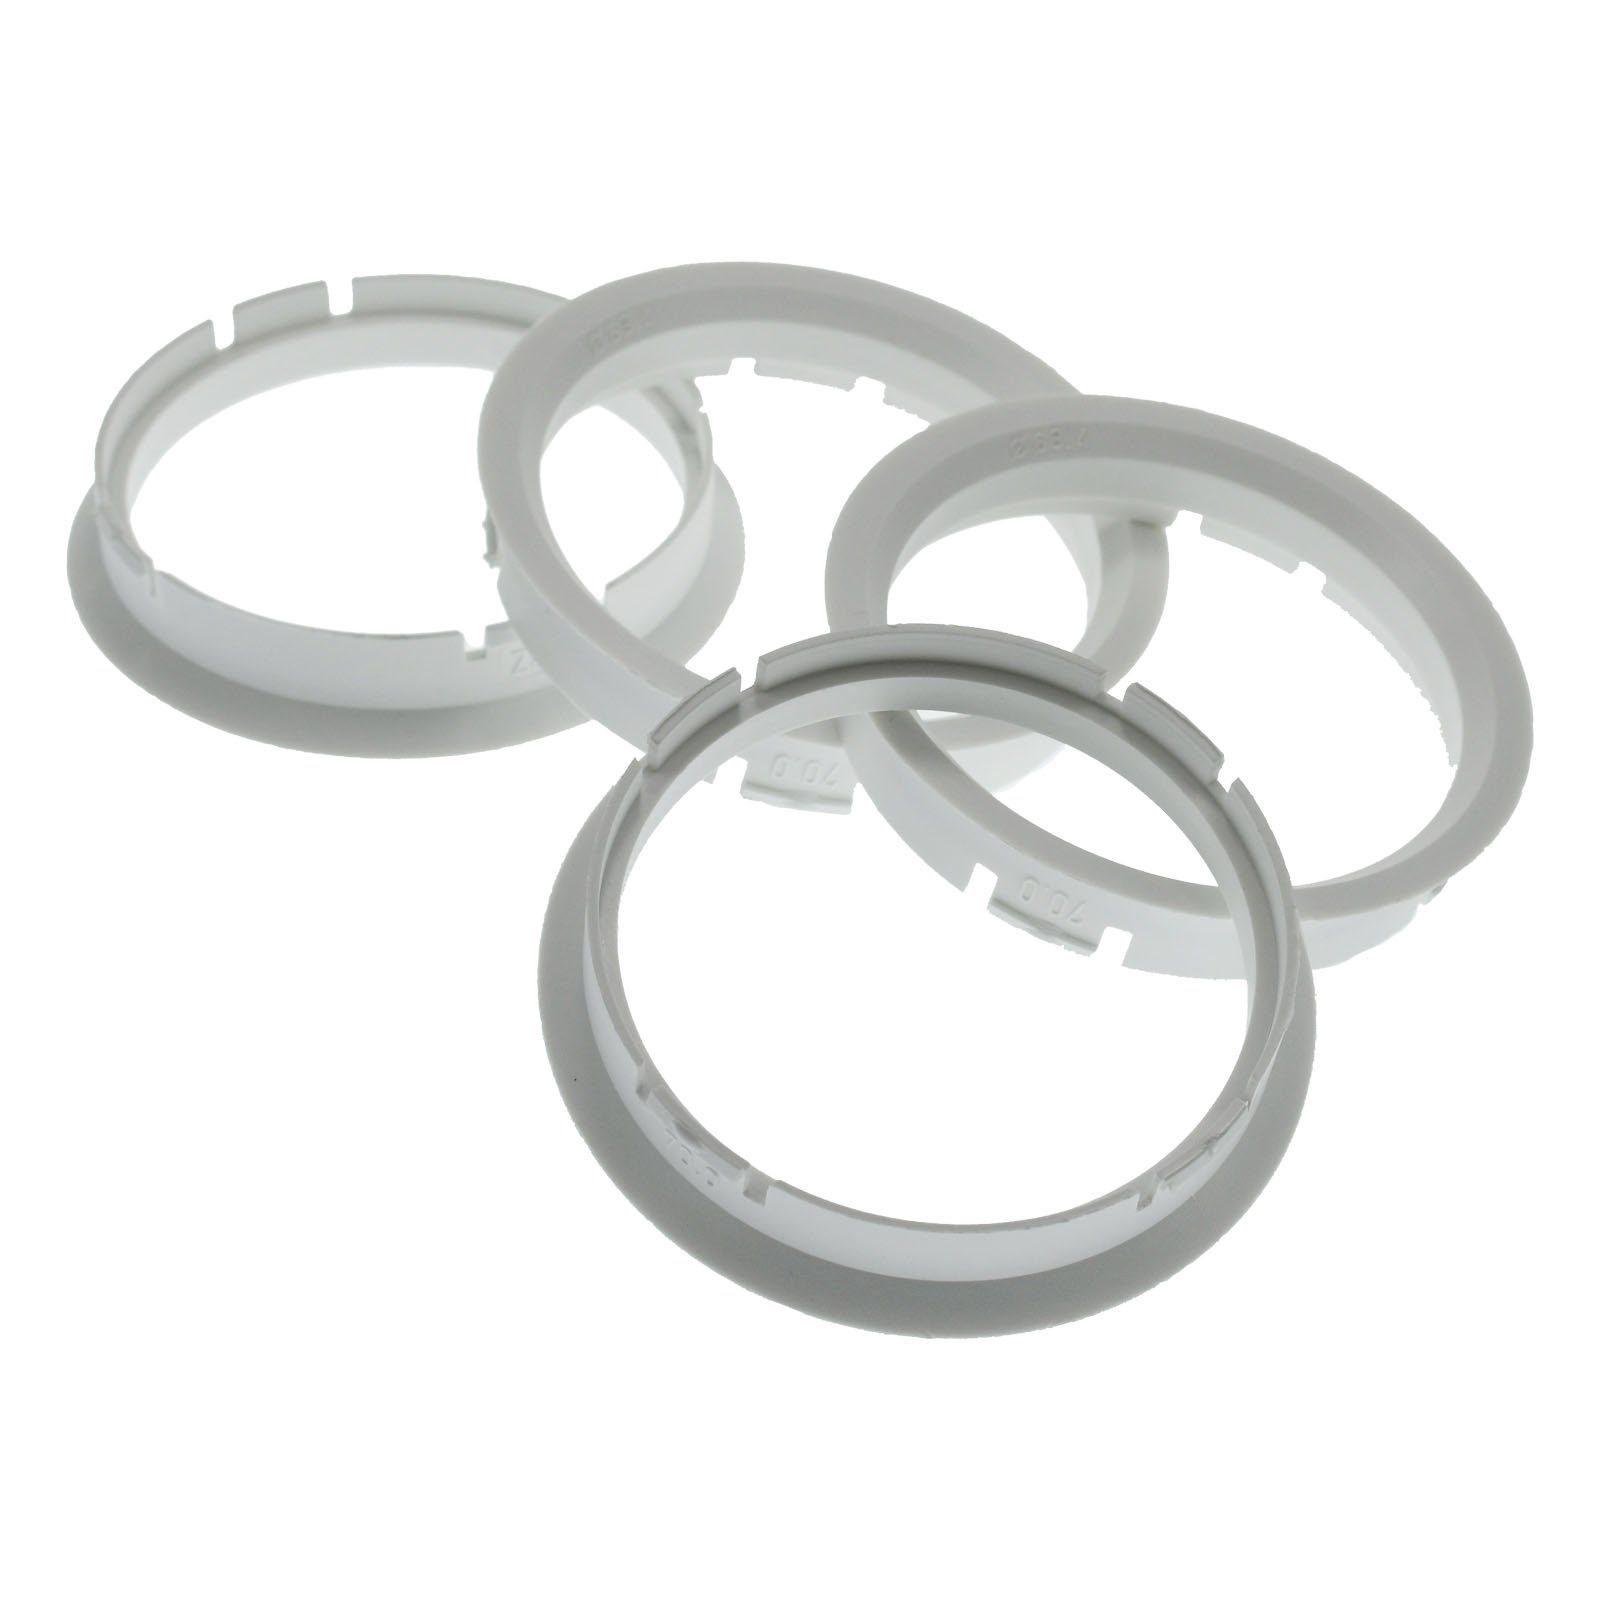 RKC Reifenstift 4x Zentrierringe Weiß Felgen Ringe Made in Germany, Maße: 70,0 x 63,4 mm | Reifenstifte